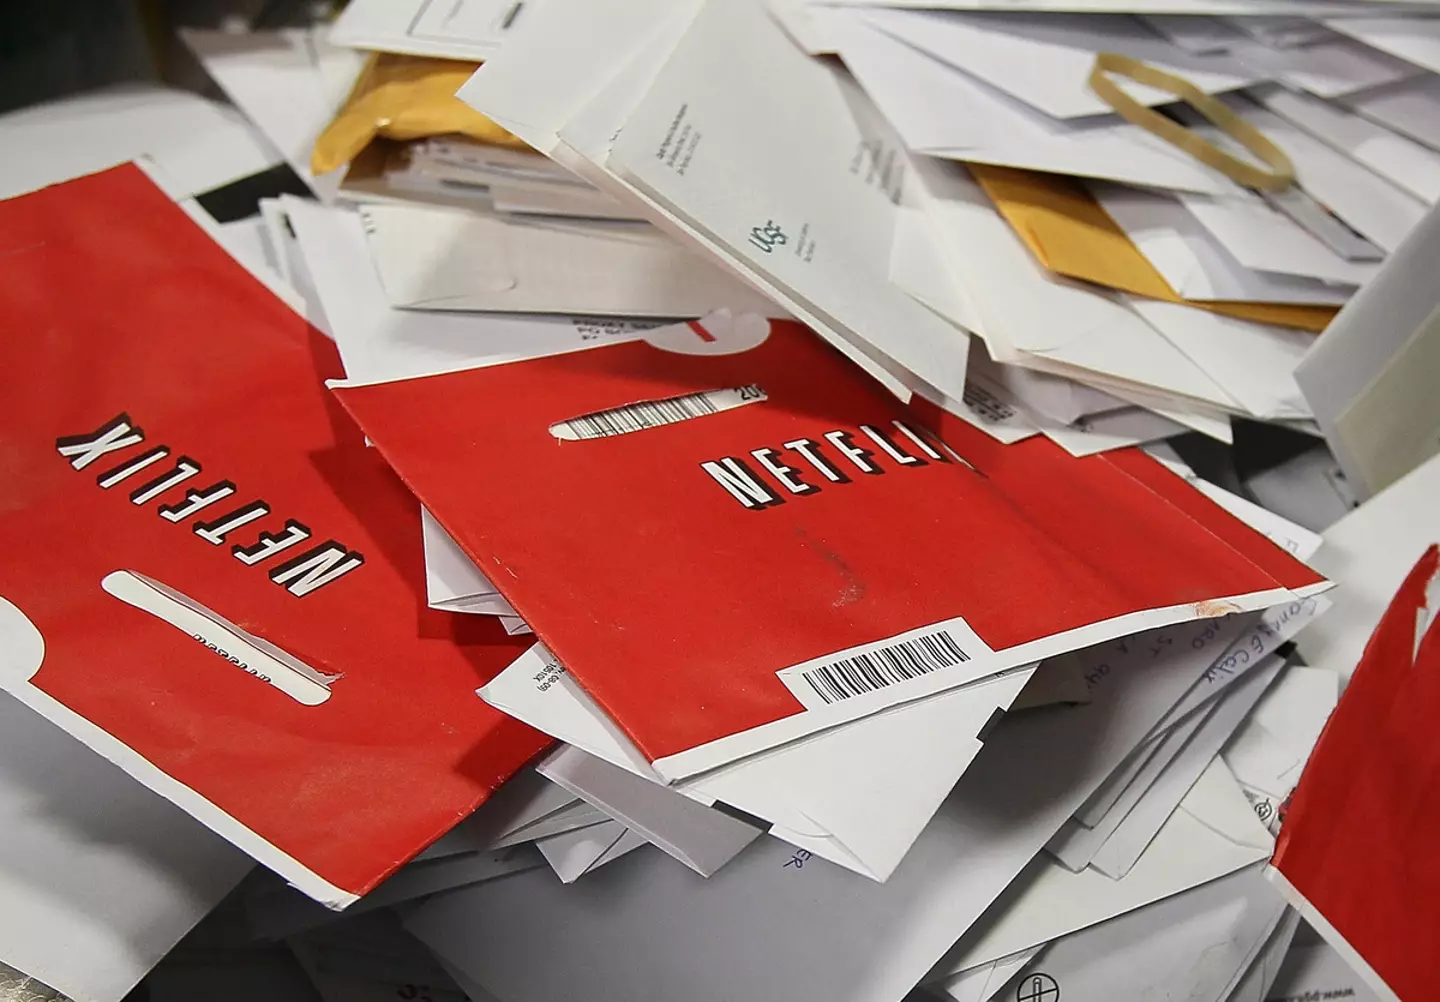 Netflix is ending its DVD rental service.